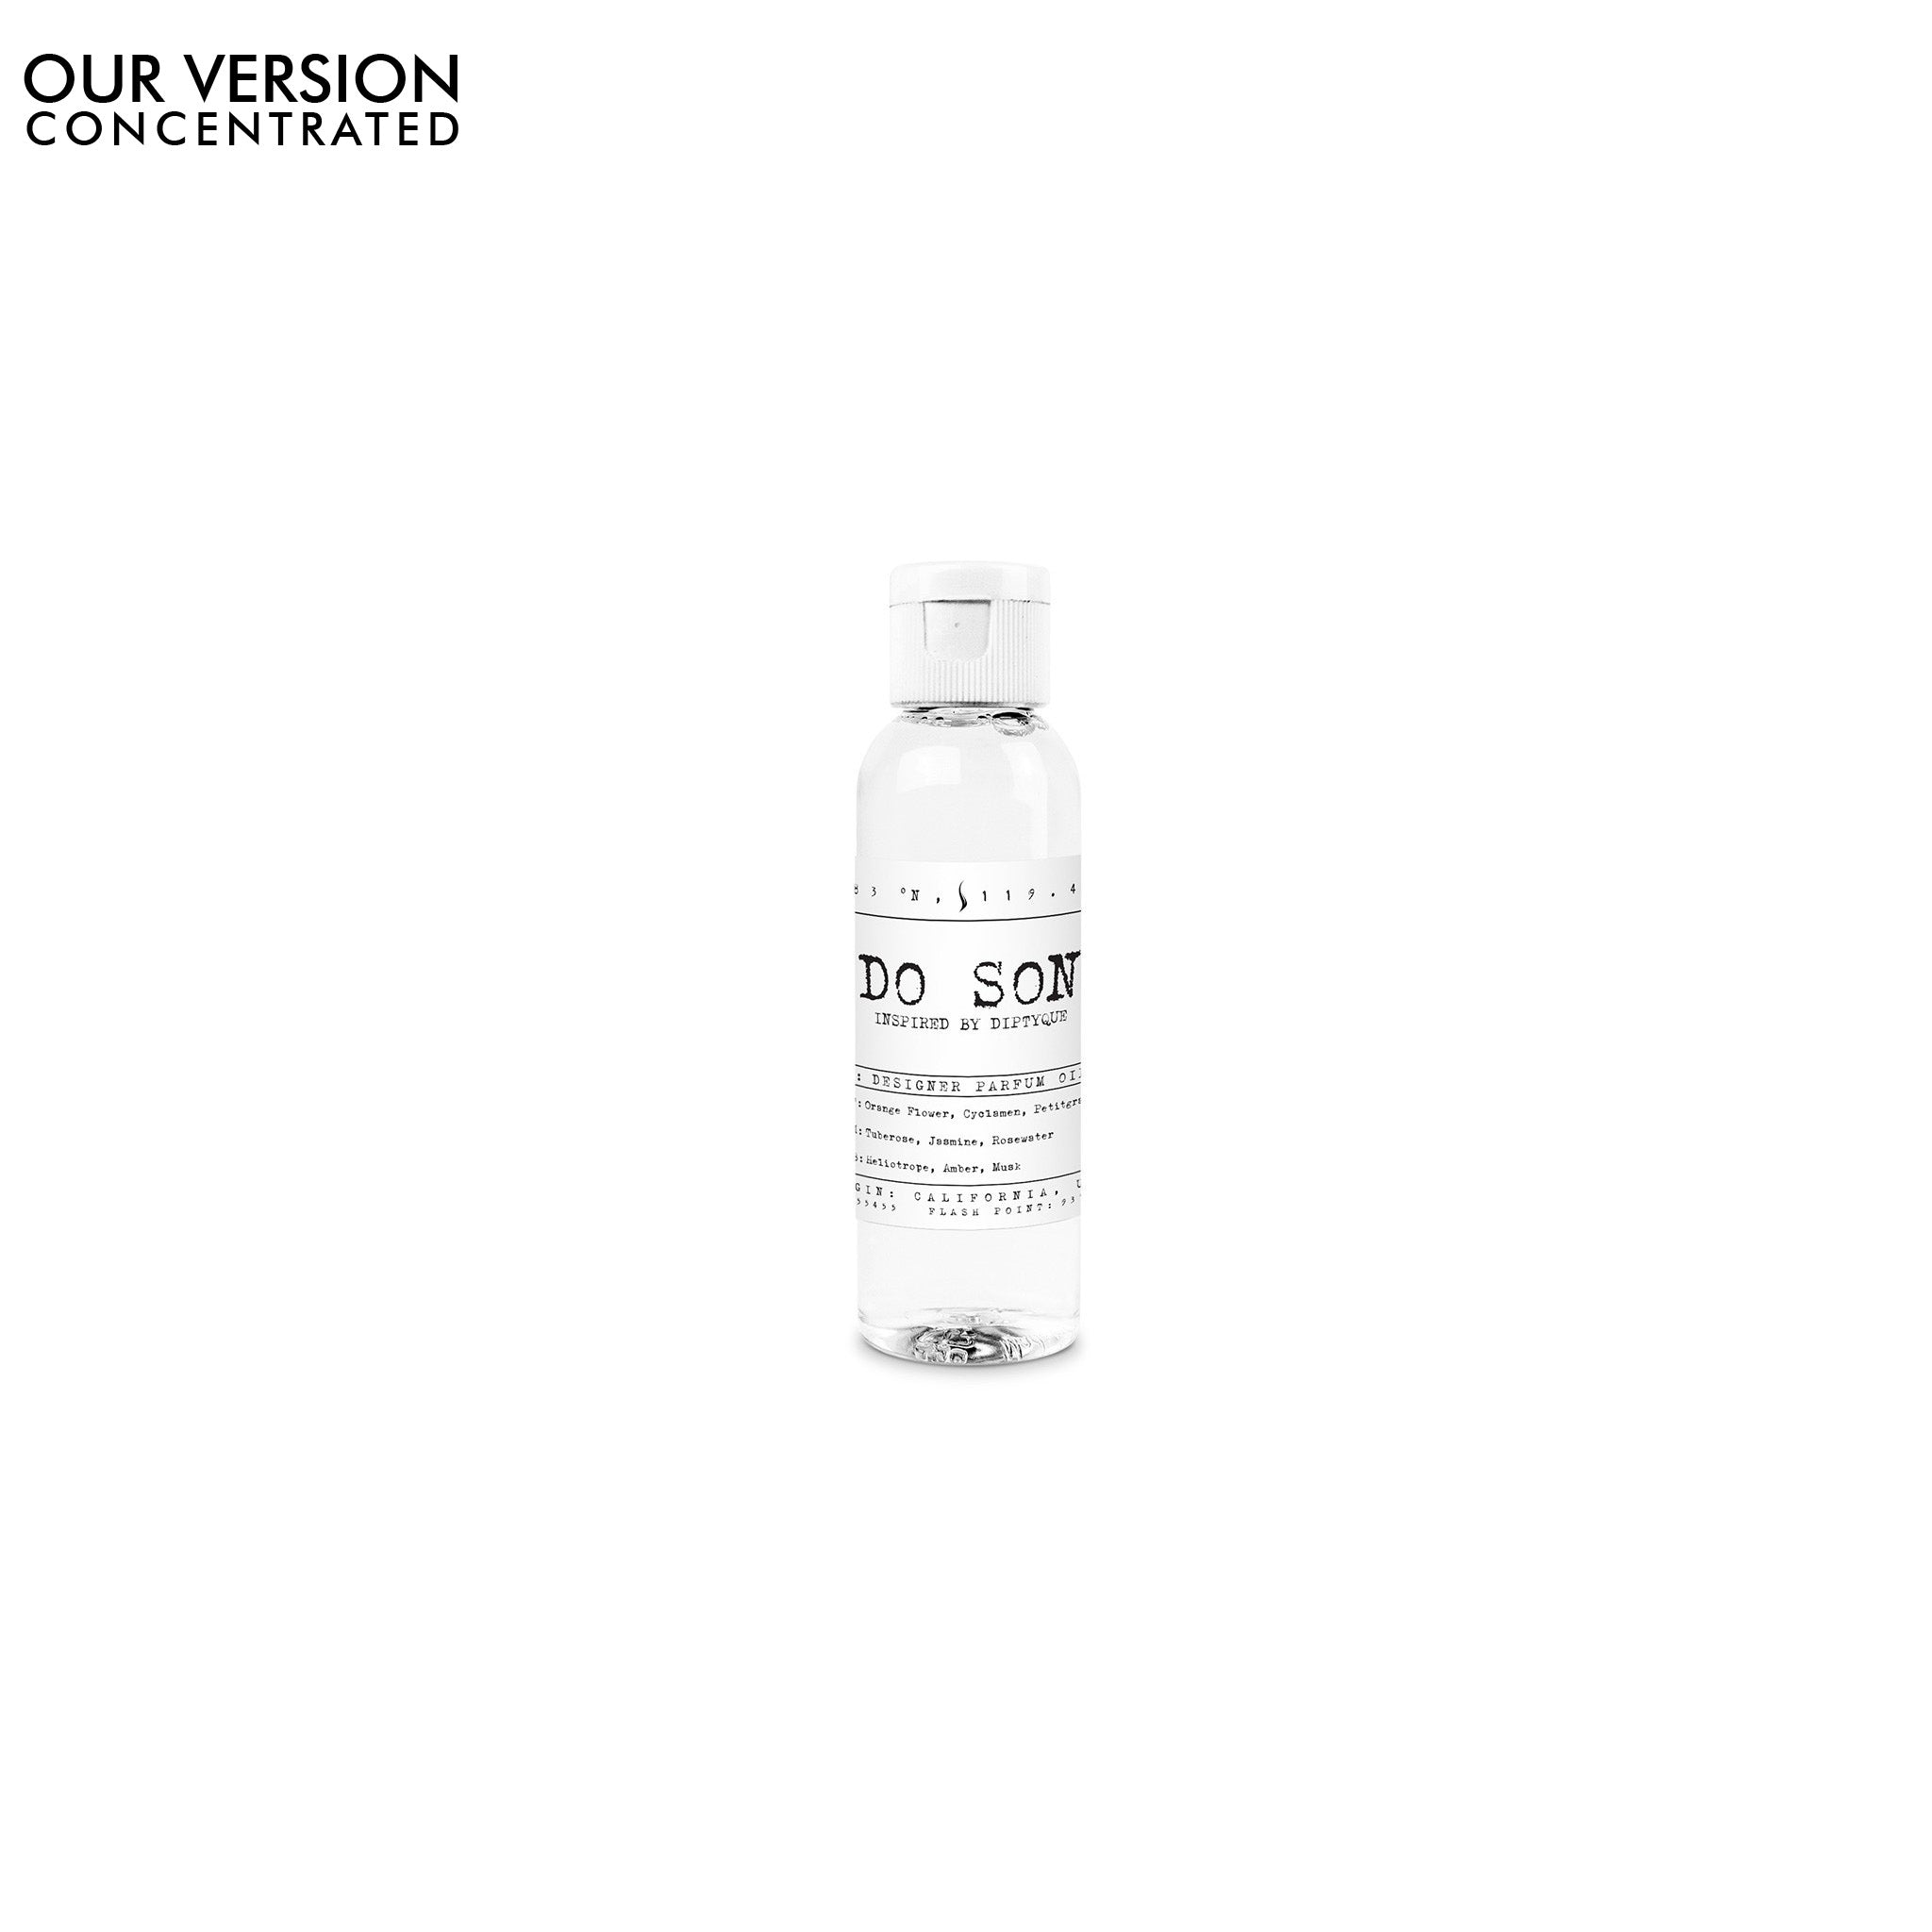 Do Son (our version) Fragrance Oil